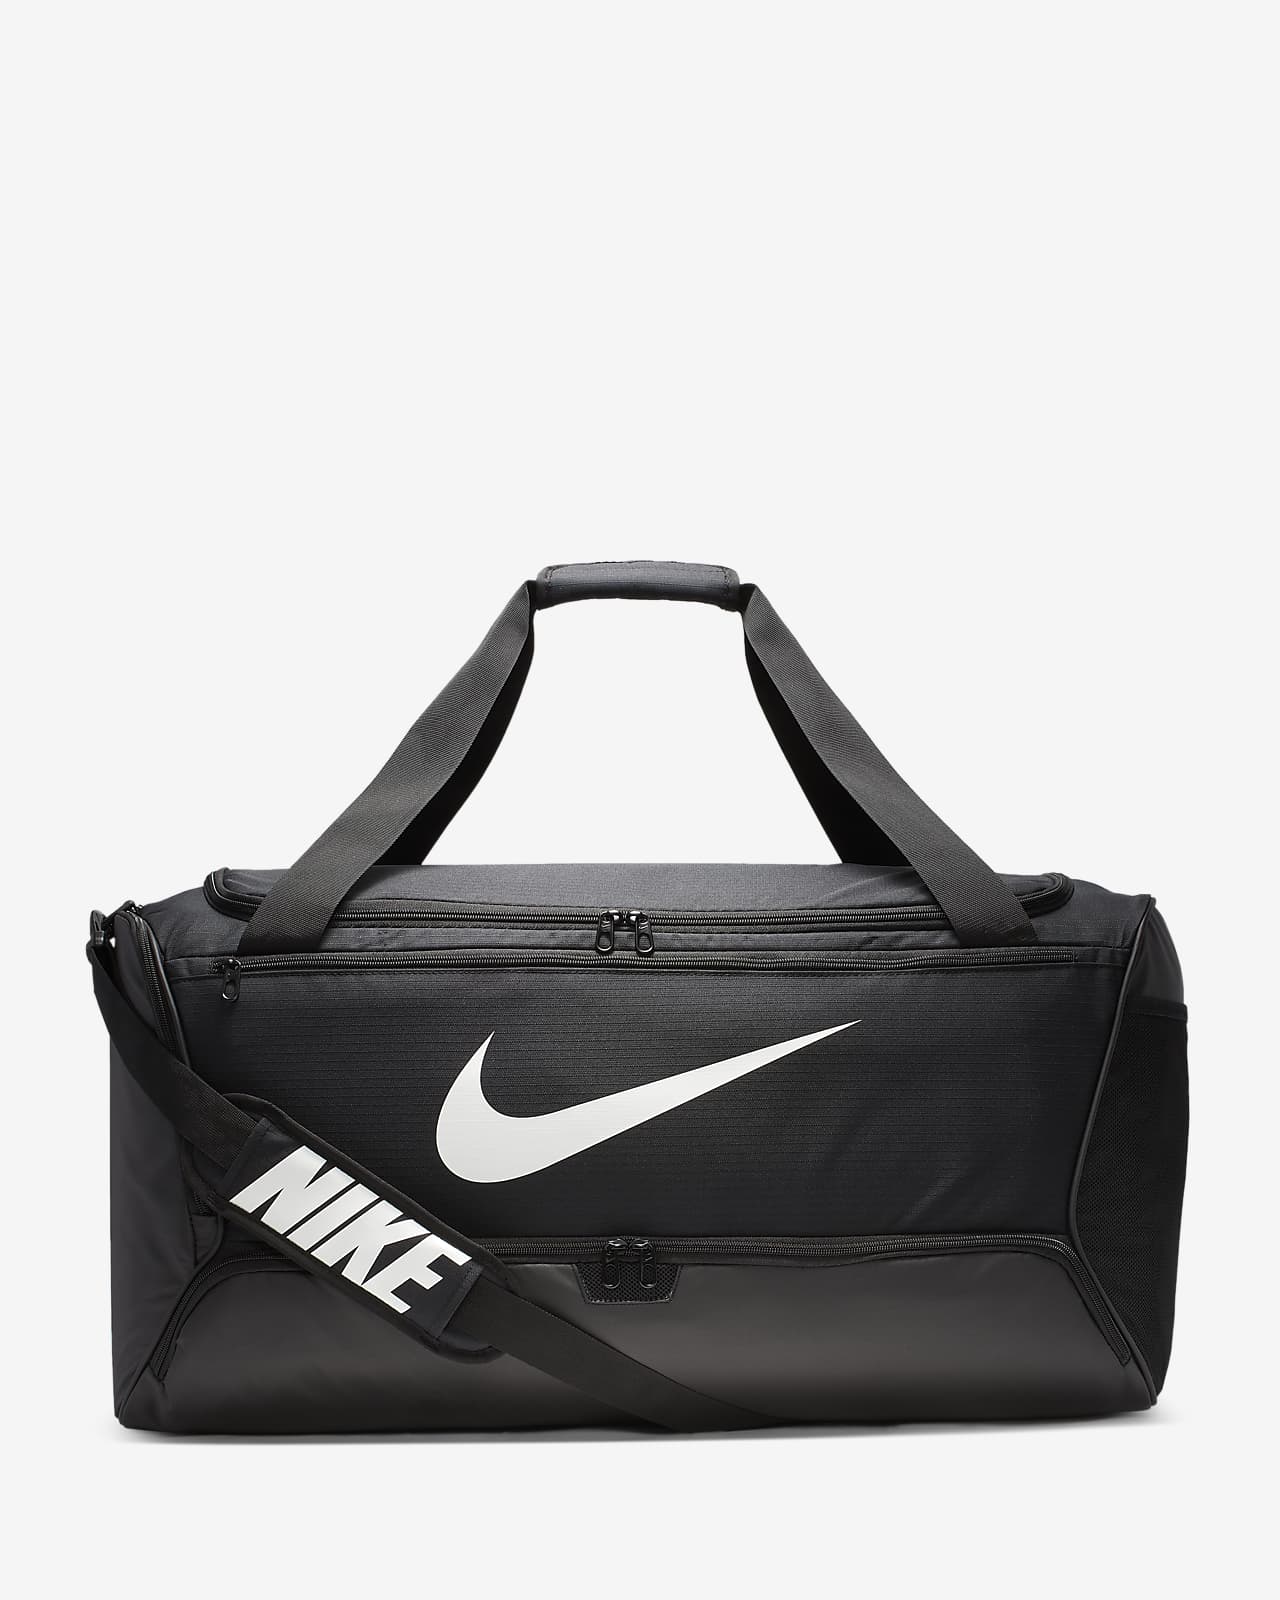 personalized nike duffel bag